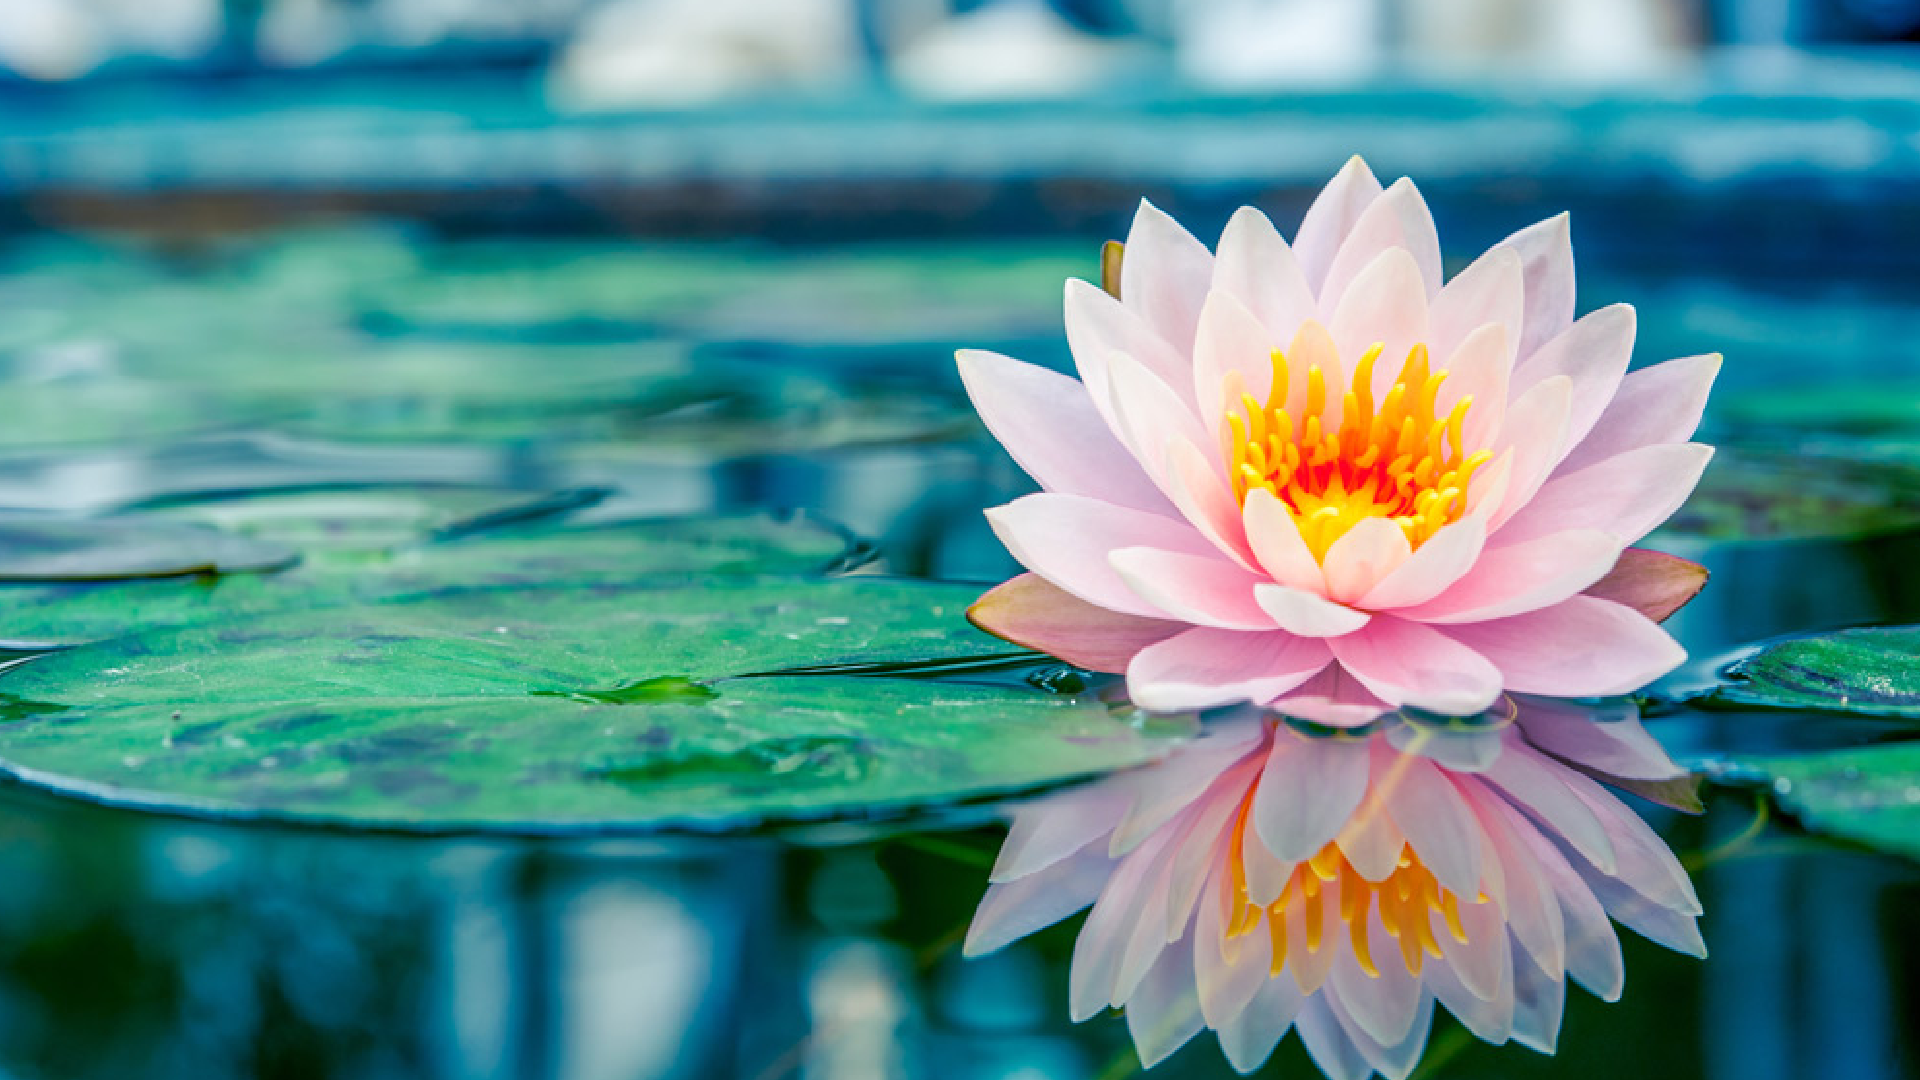 The Transcendent Symbolism of the Lotus Flower